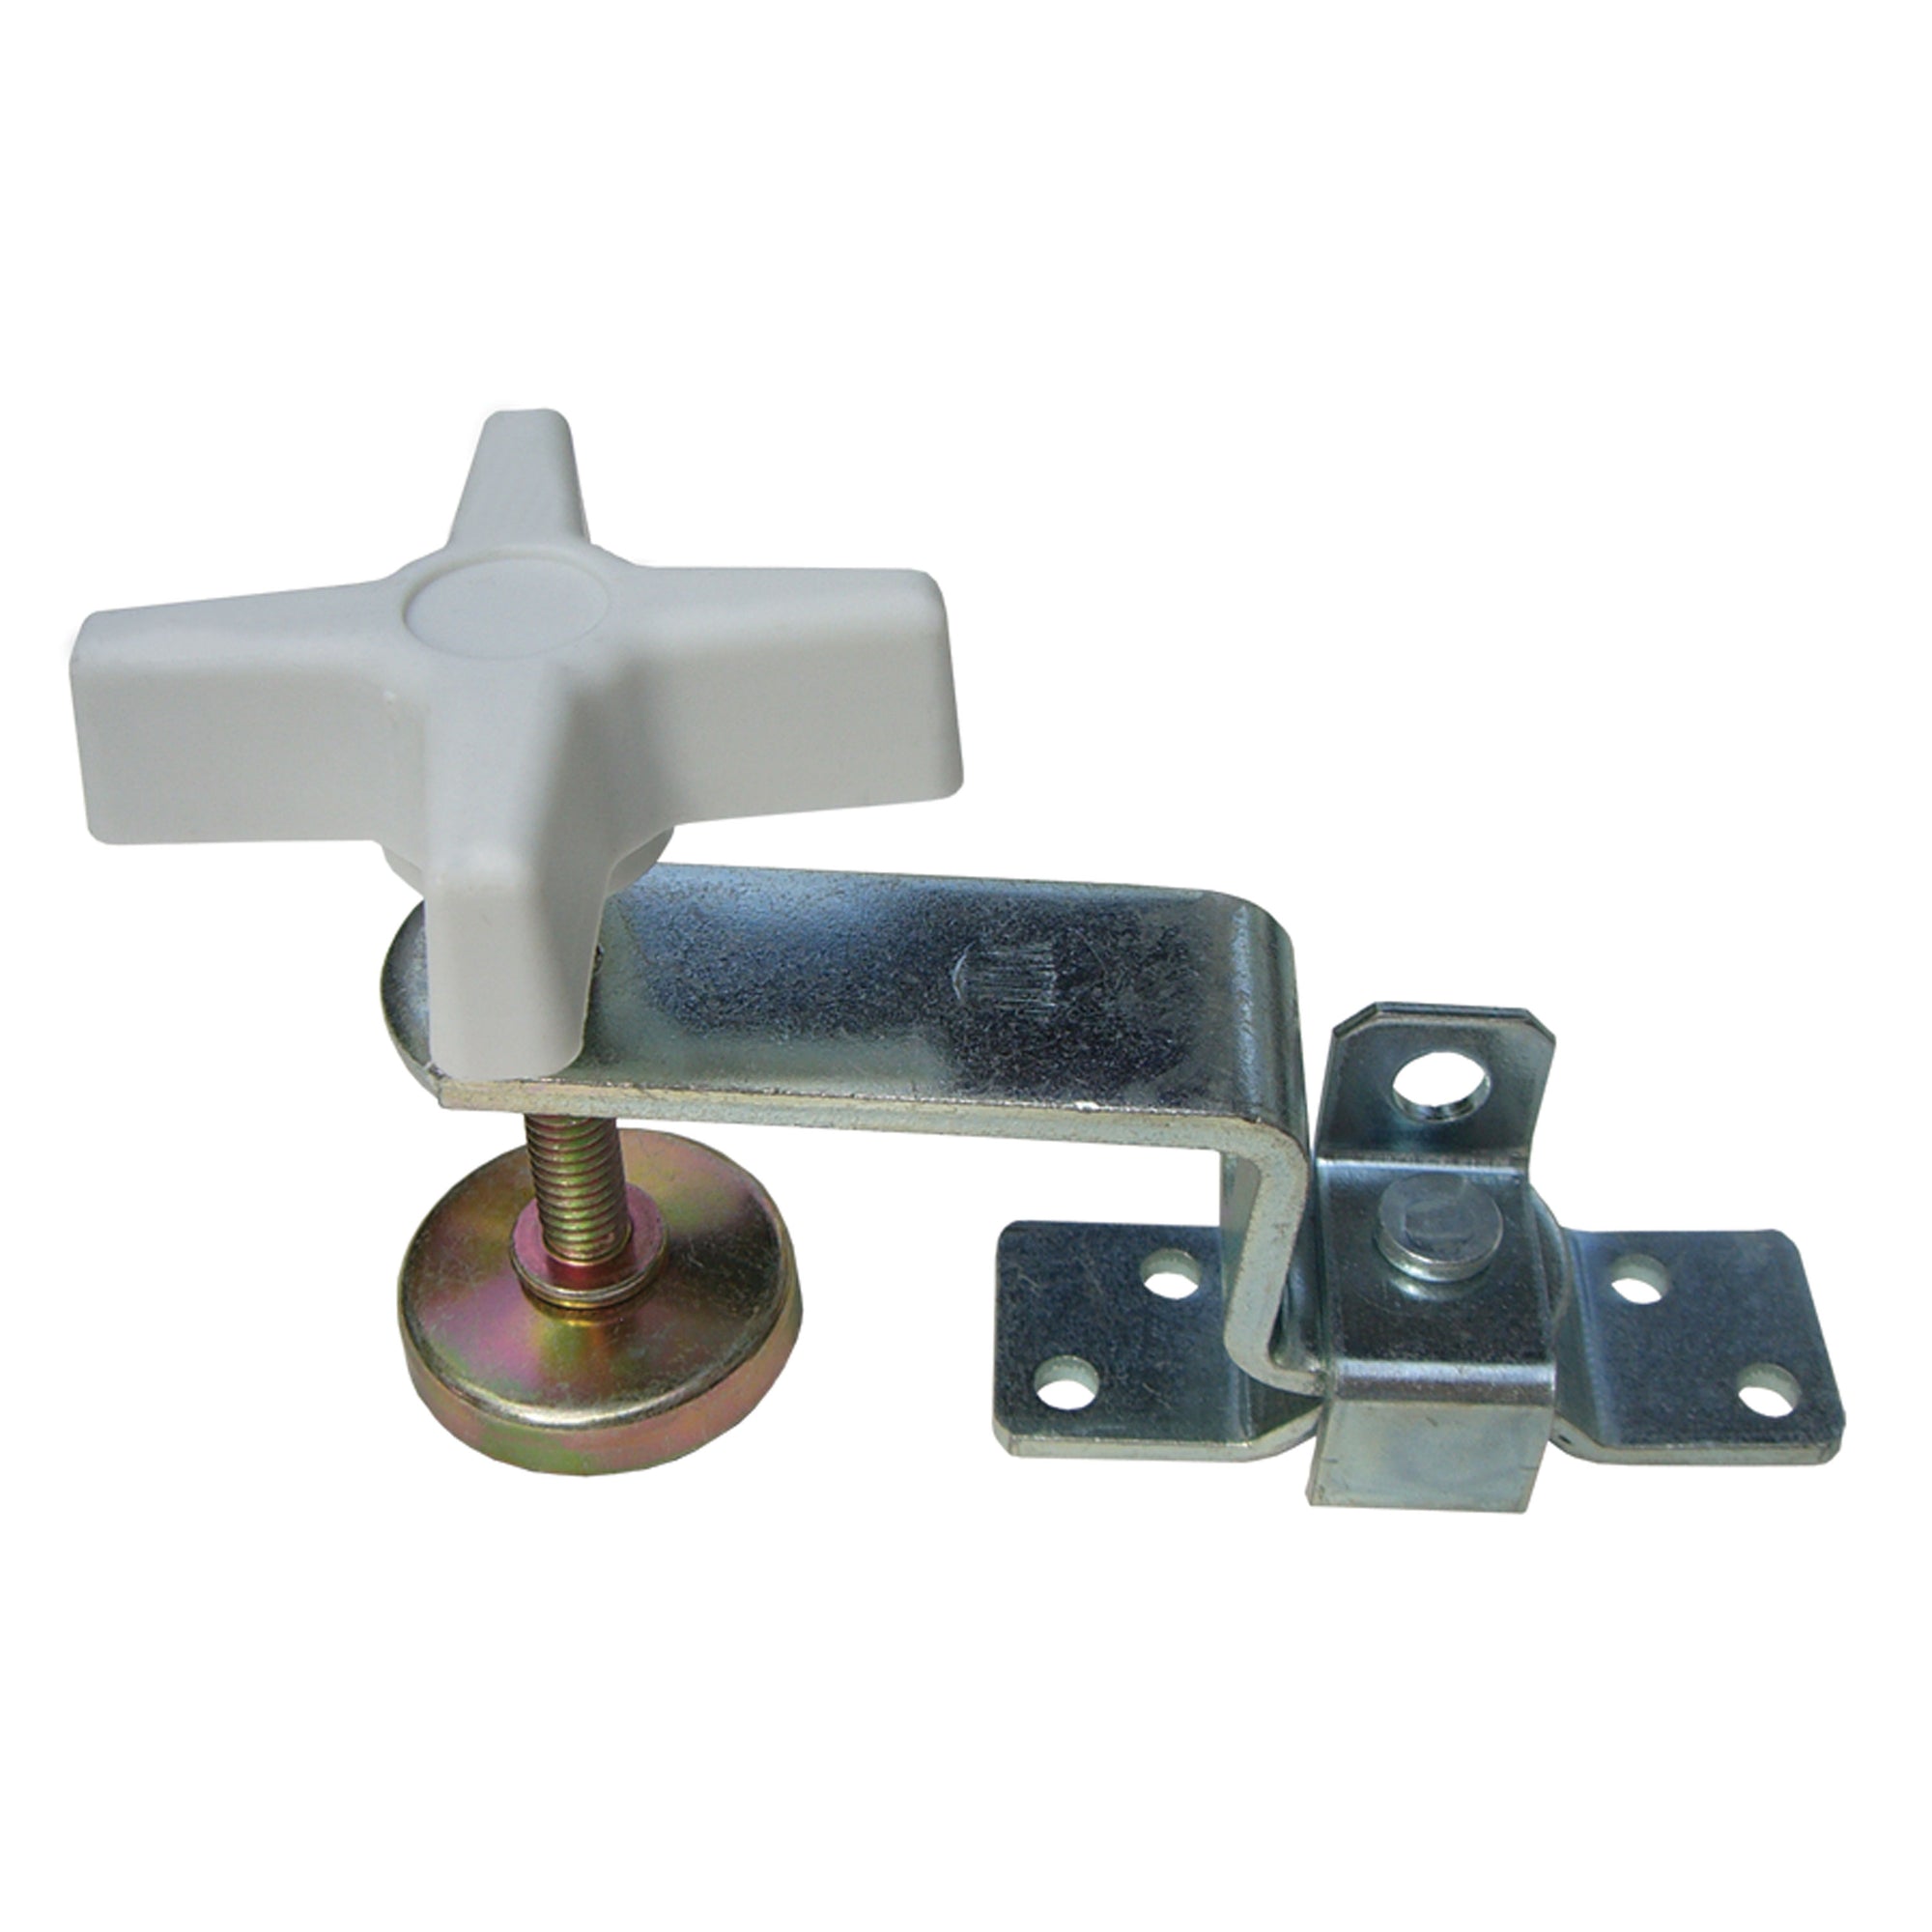 JR Products 20785 Fold-Out Bunk Clamp - Zinc